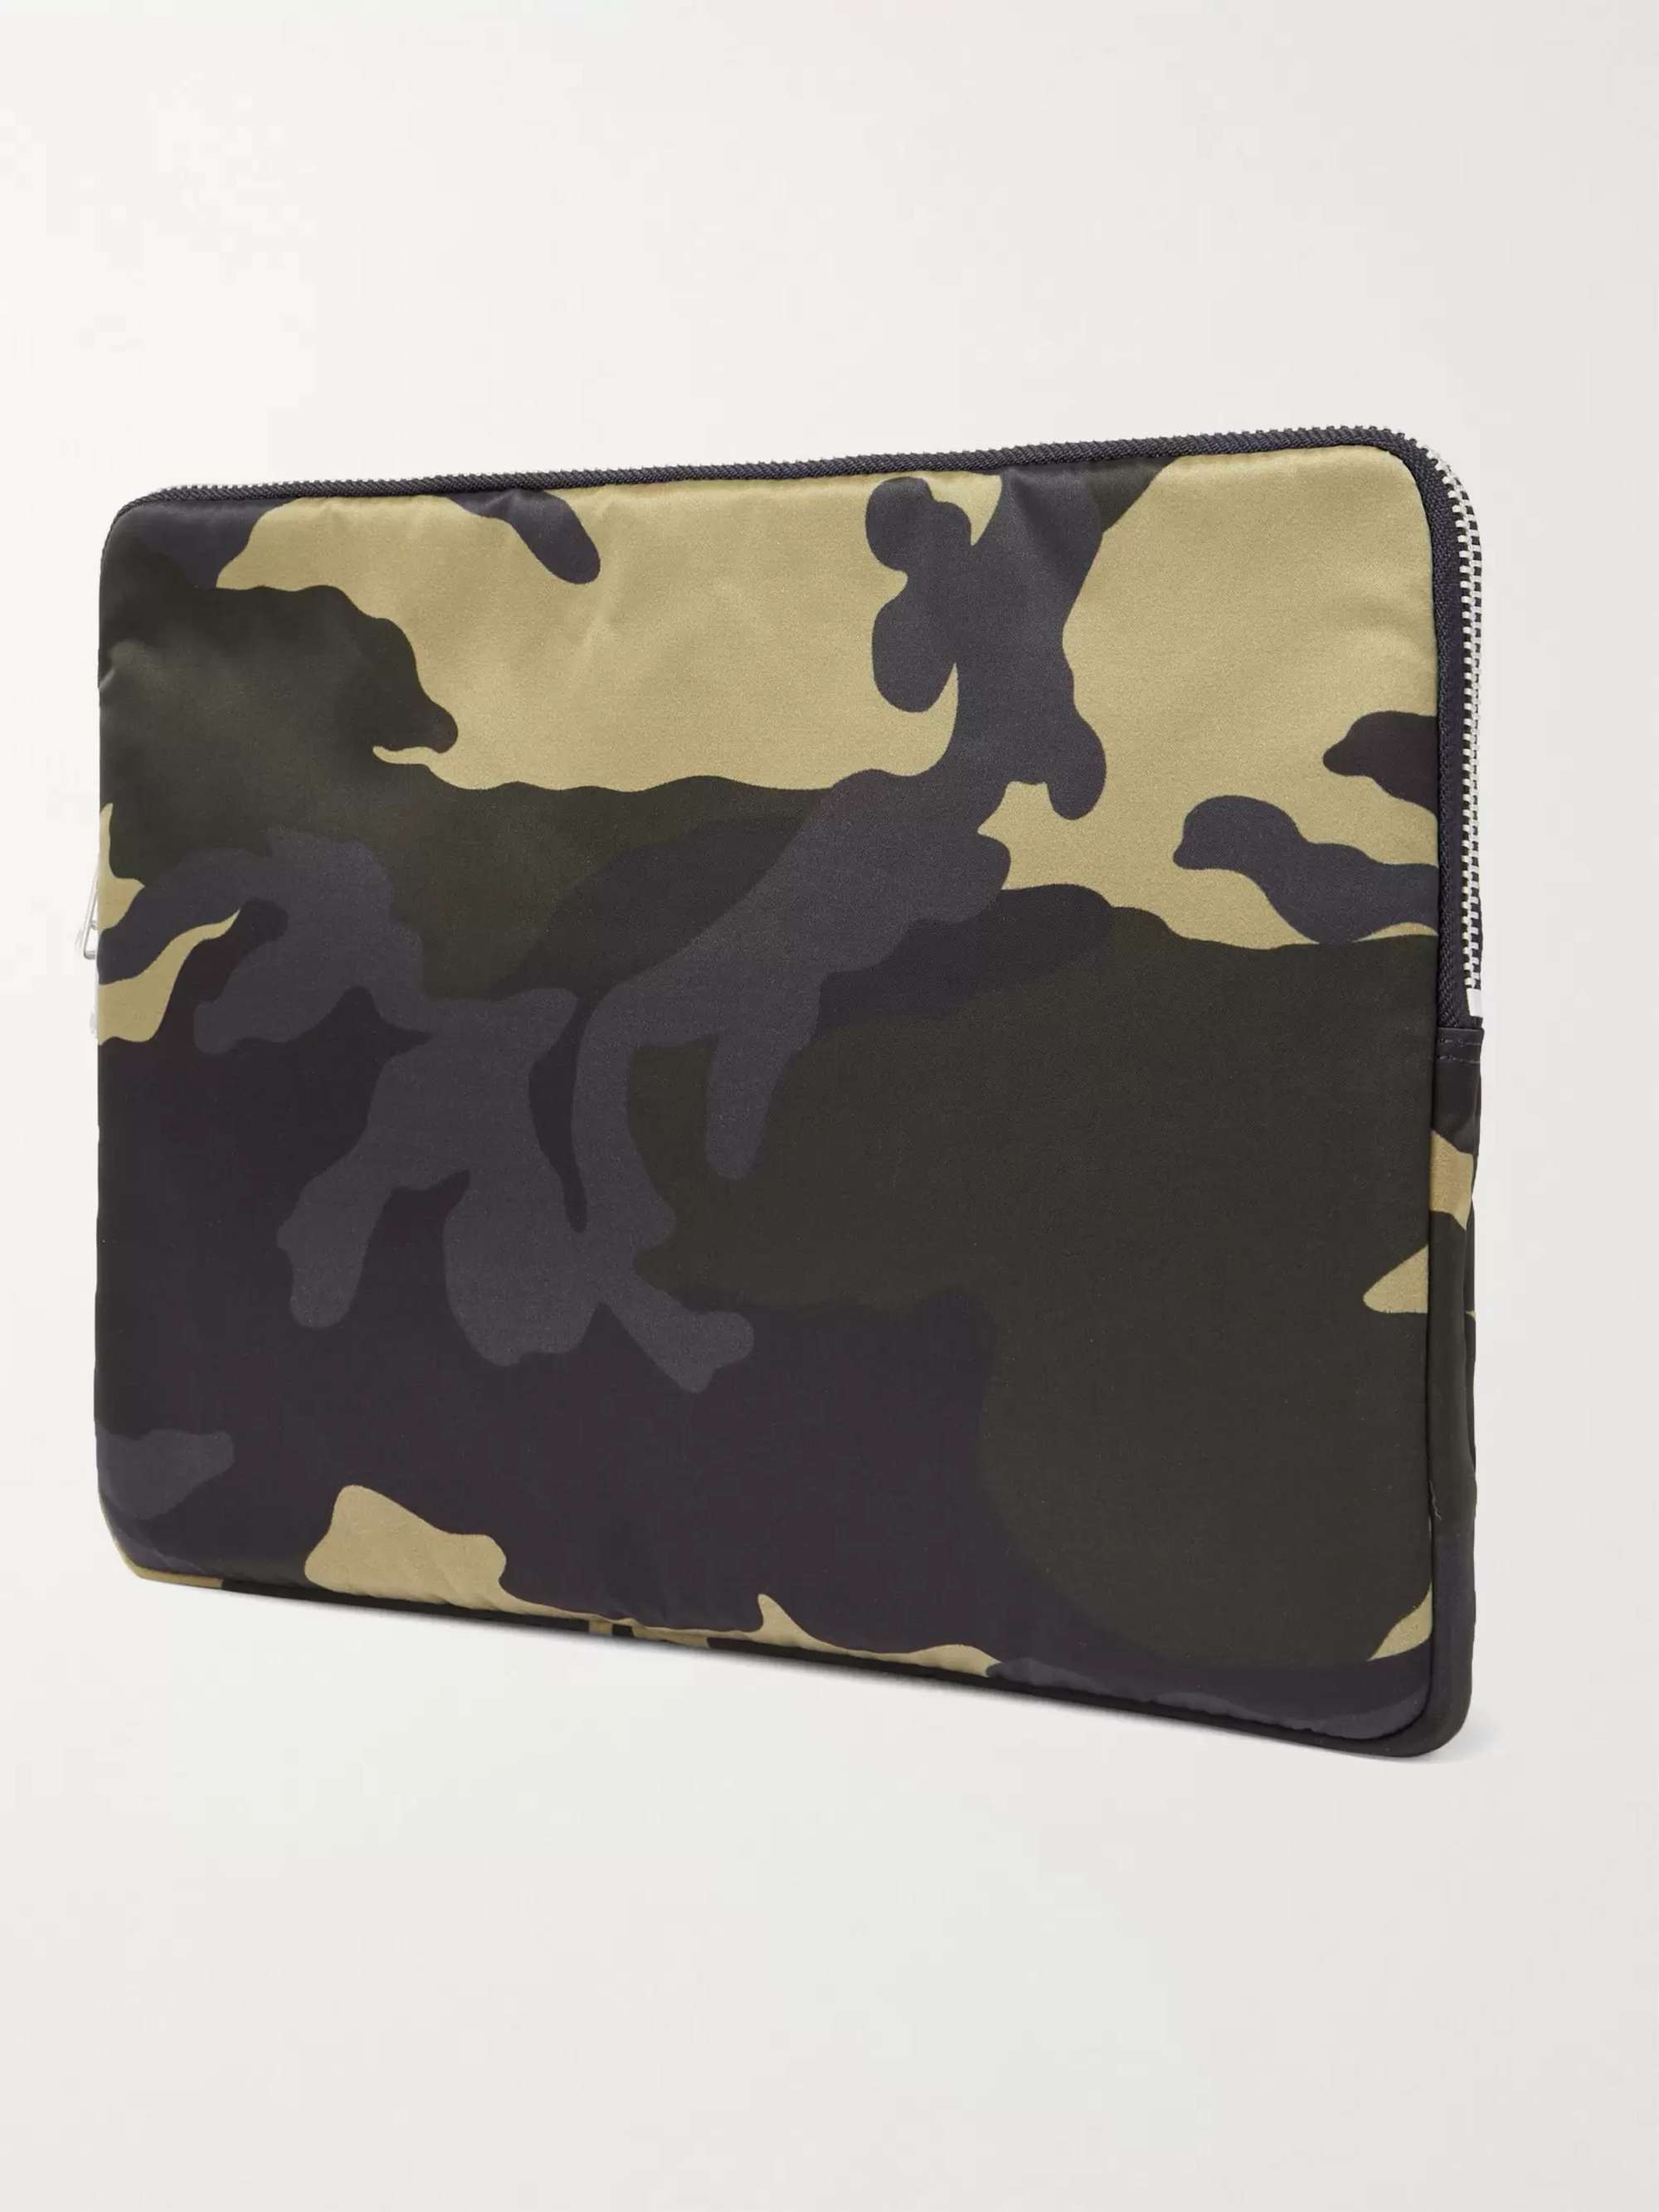 PORTER-YOSHIDA & CO Counter Shade Camouflage-Print Nylon Pouch